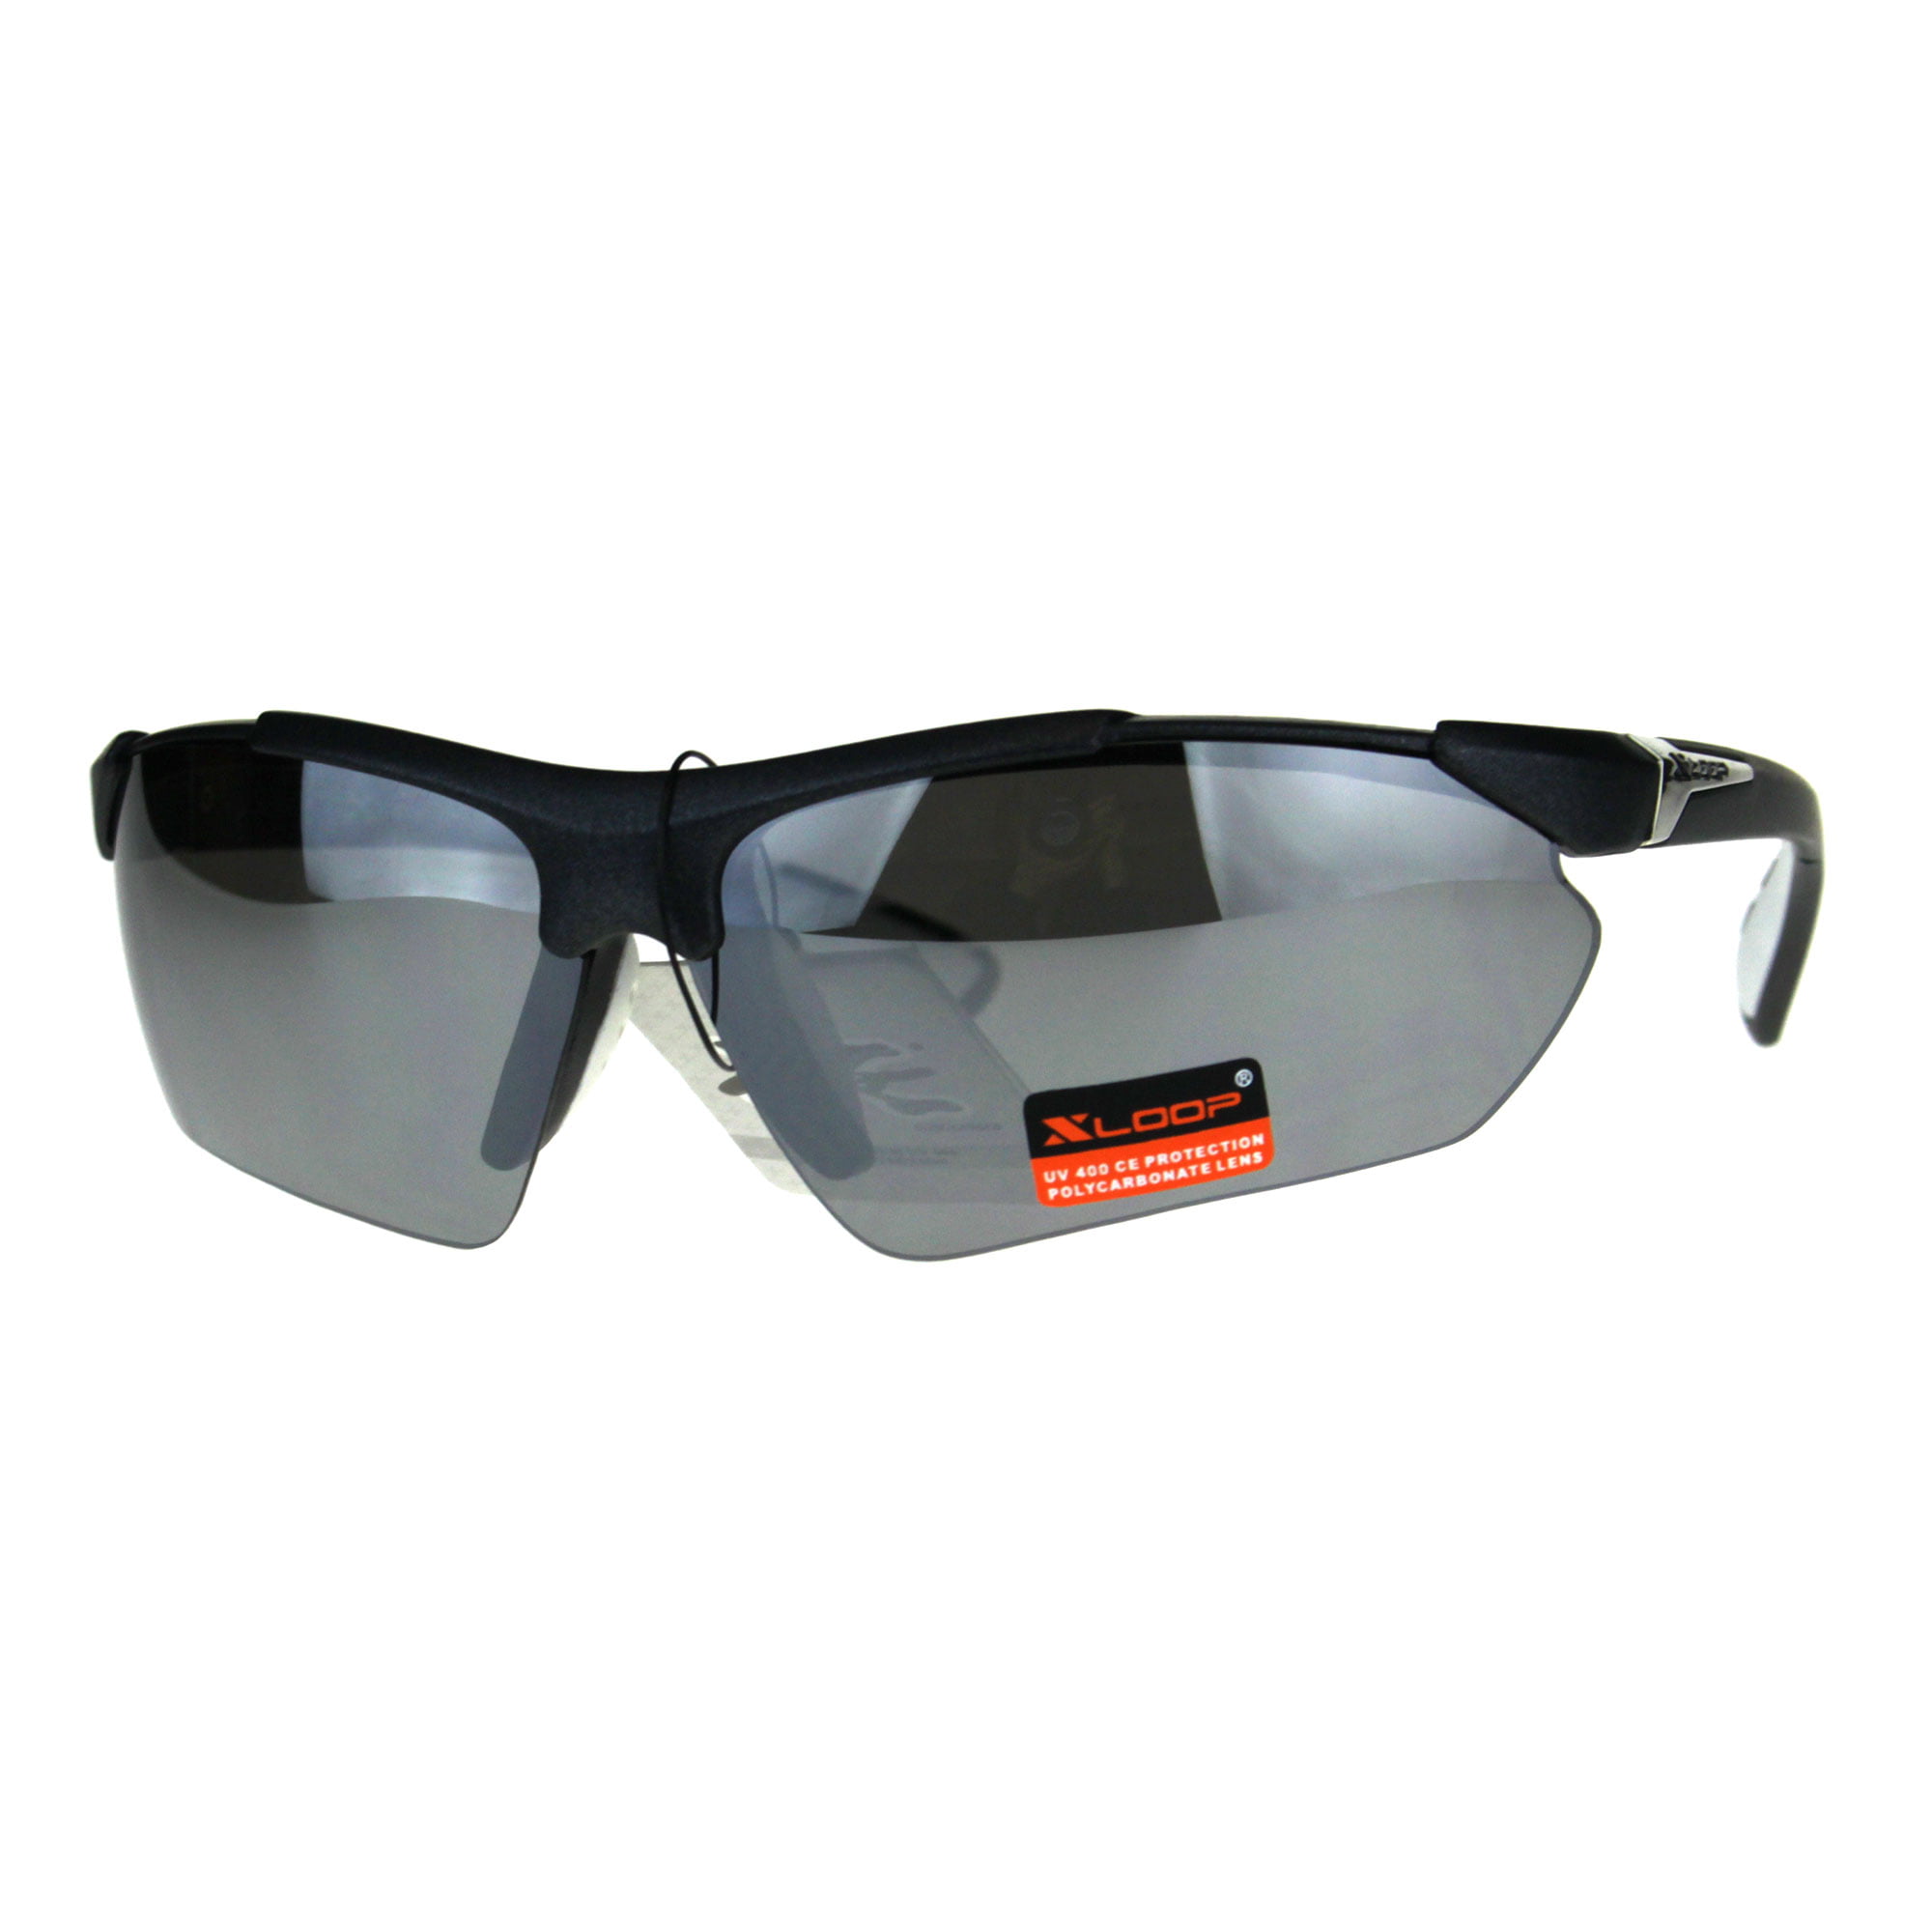 X Loop Sport Half Frame Sunglasses For Men And Women Wrap Around Orange+White 